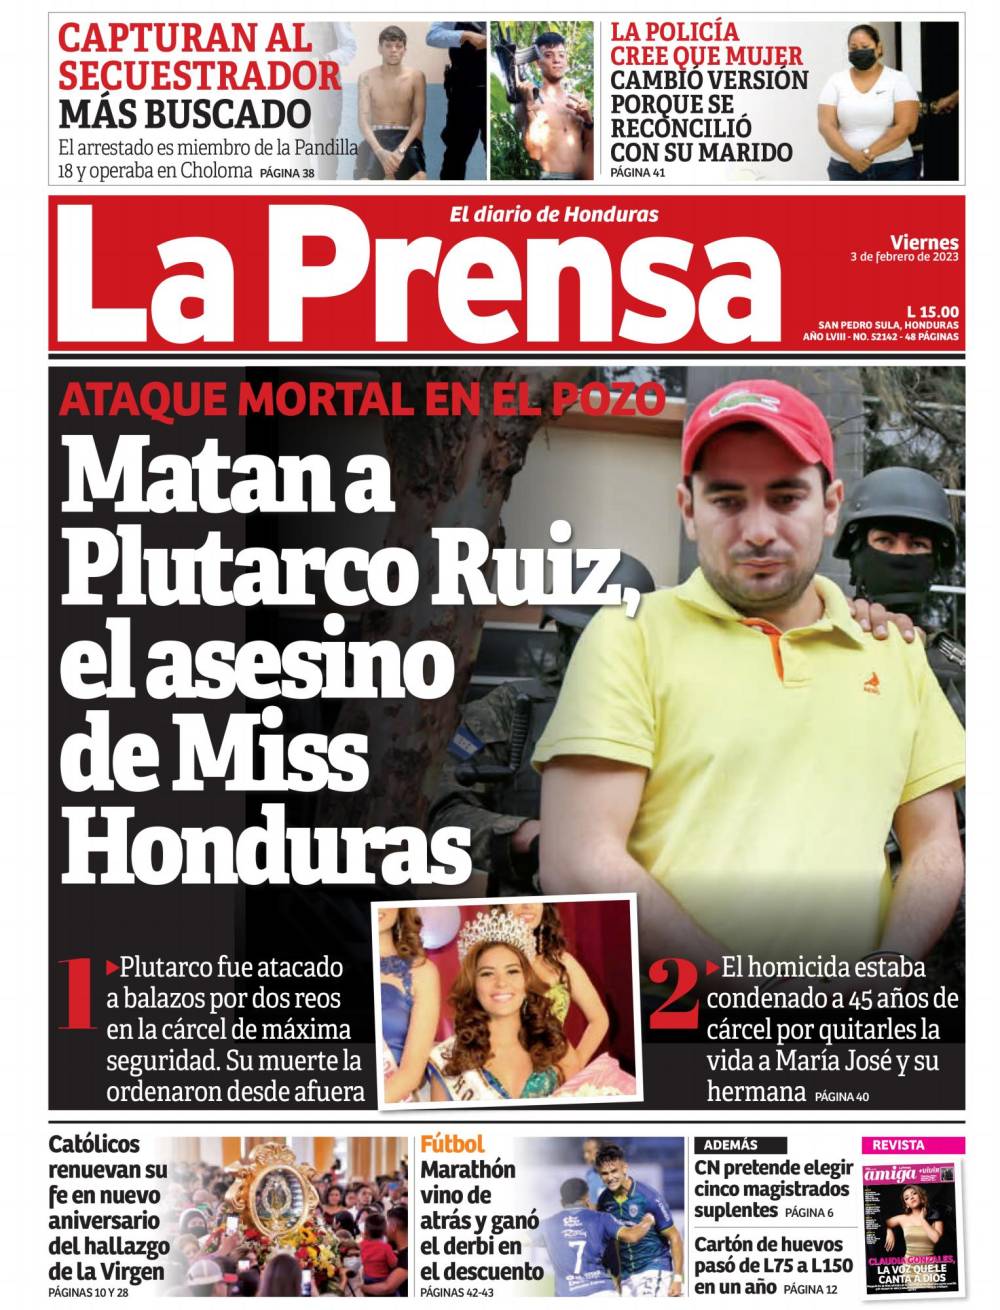 Matan a Plutarco Ruiz, el asesino de Miss Honduras